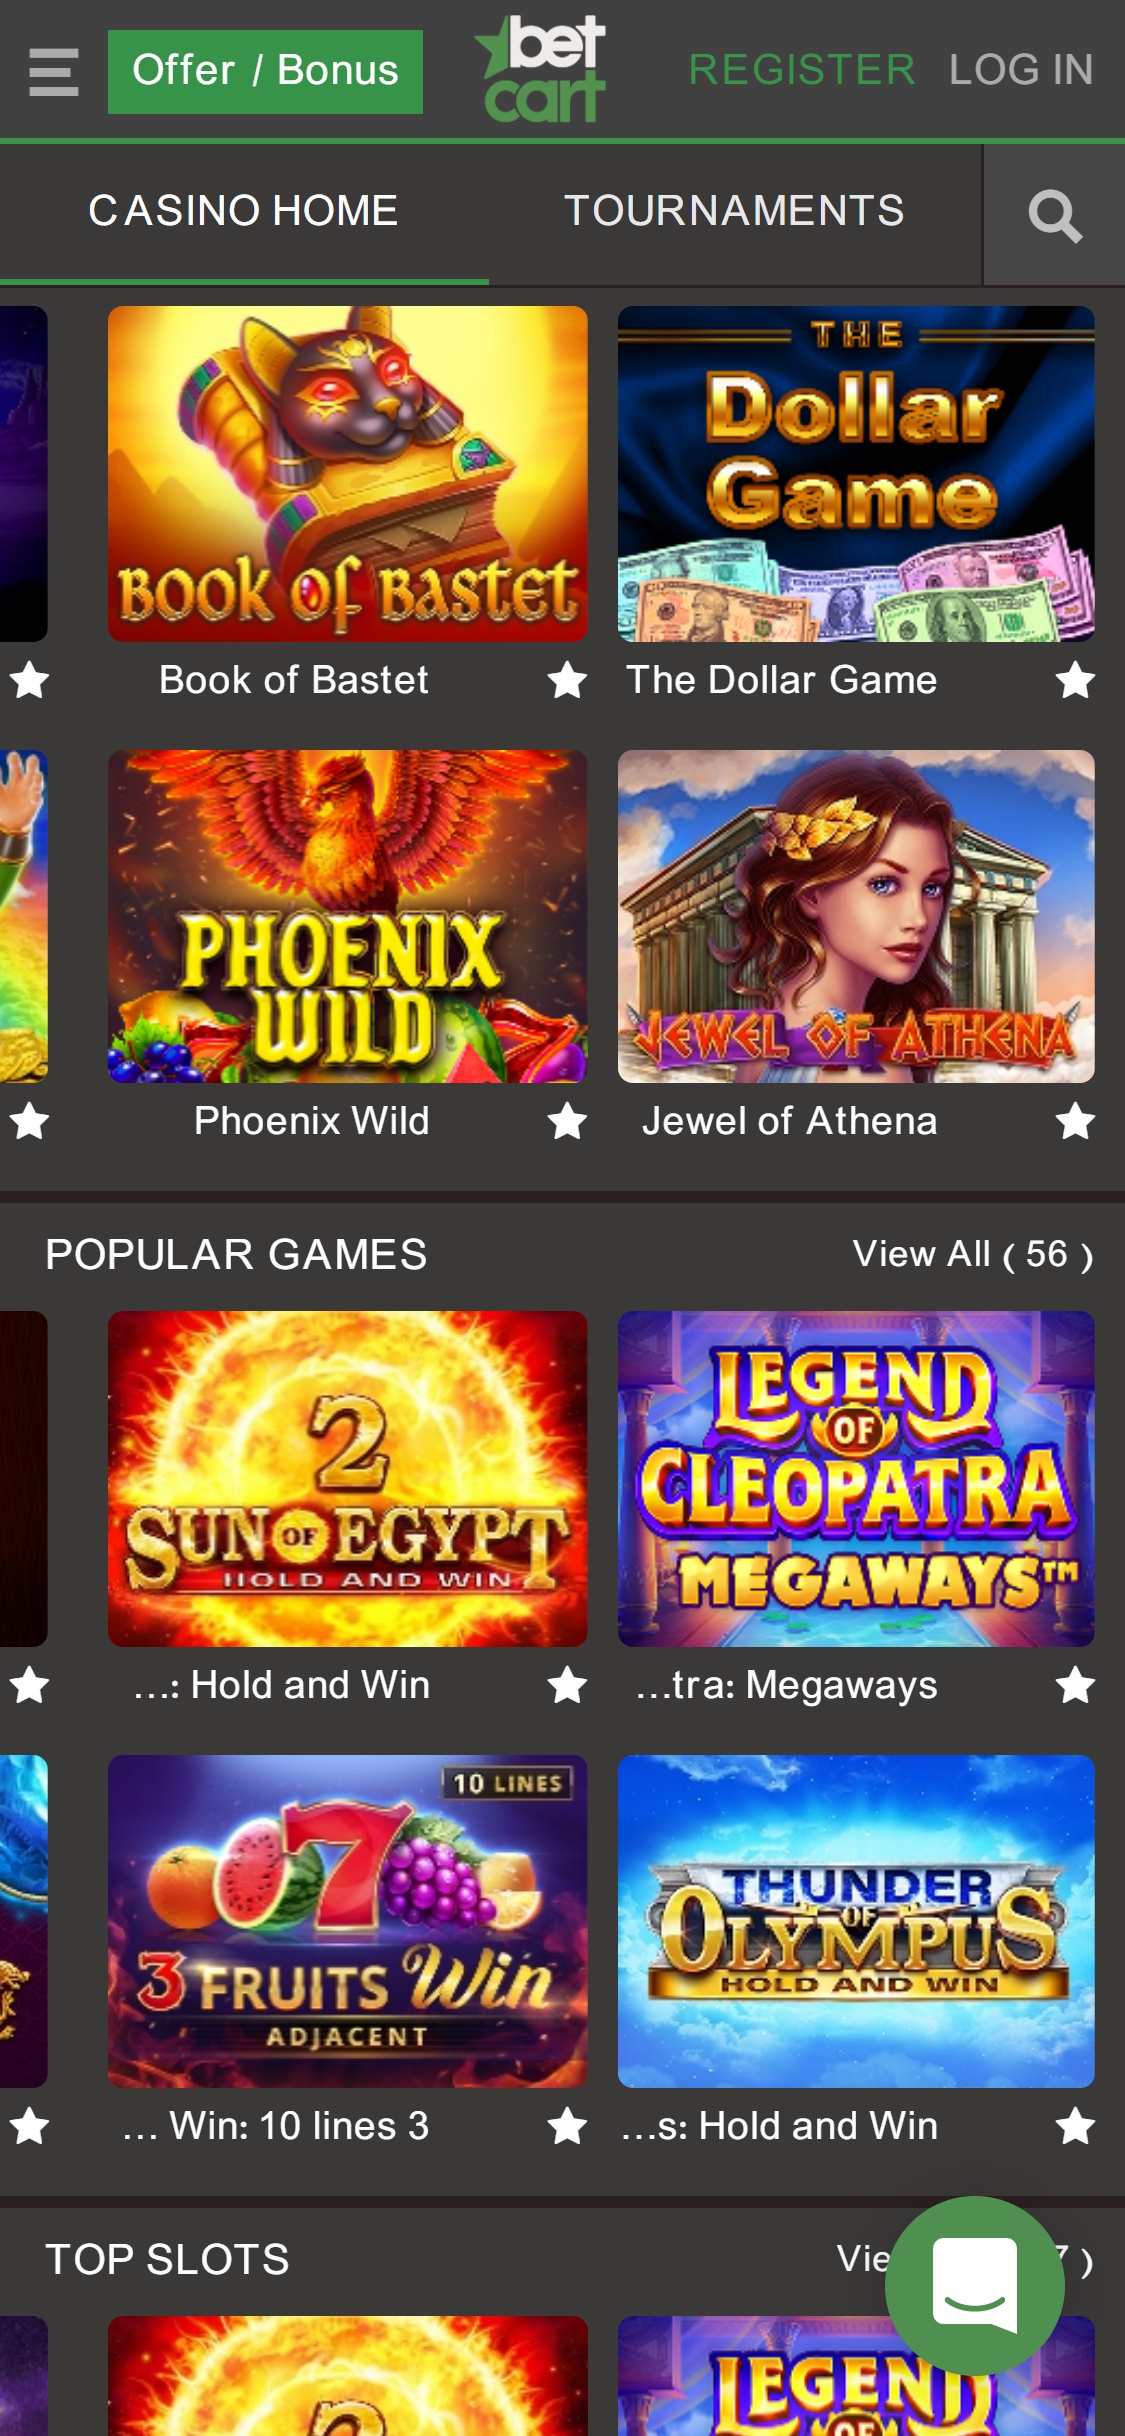 Betcart Casino Mobile Games Review